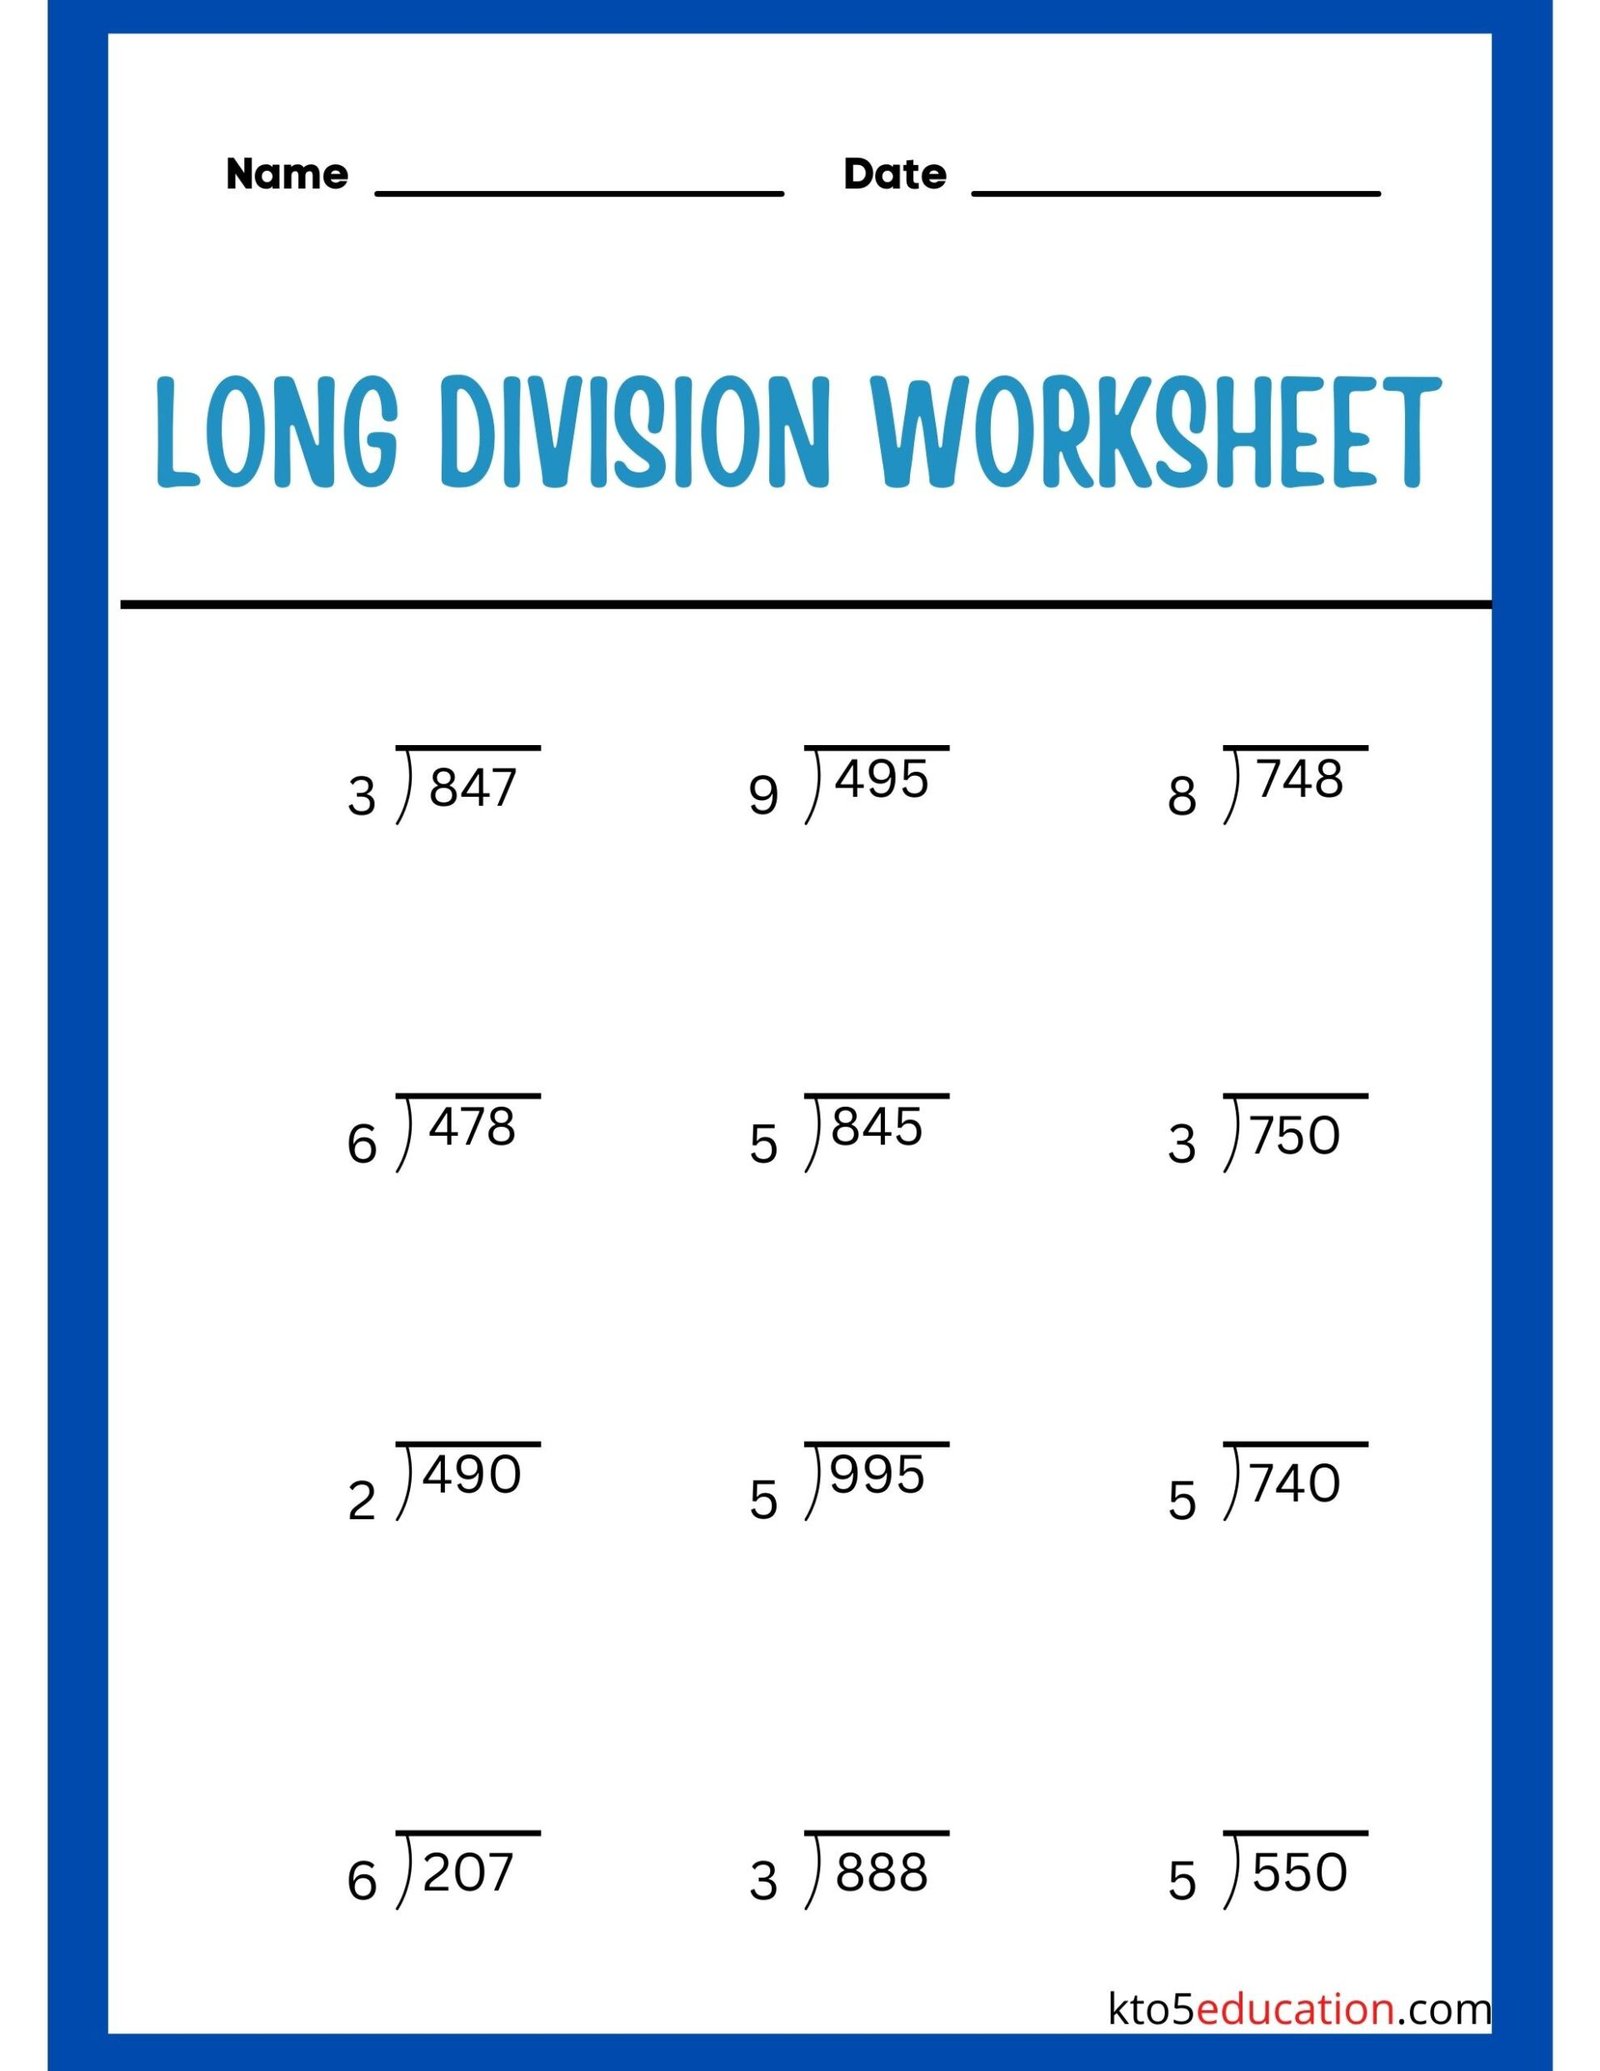 long-division-worksheets-grade-4-free-download